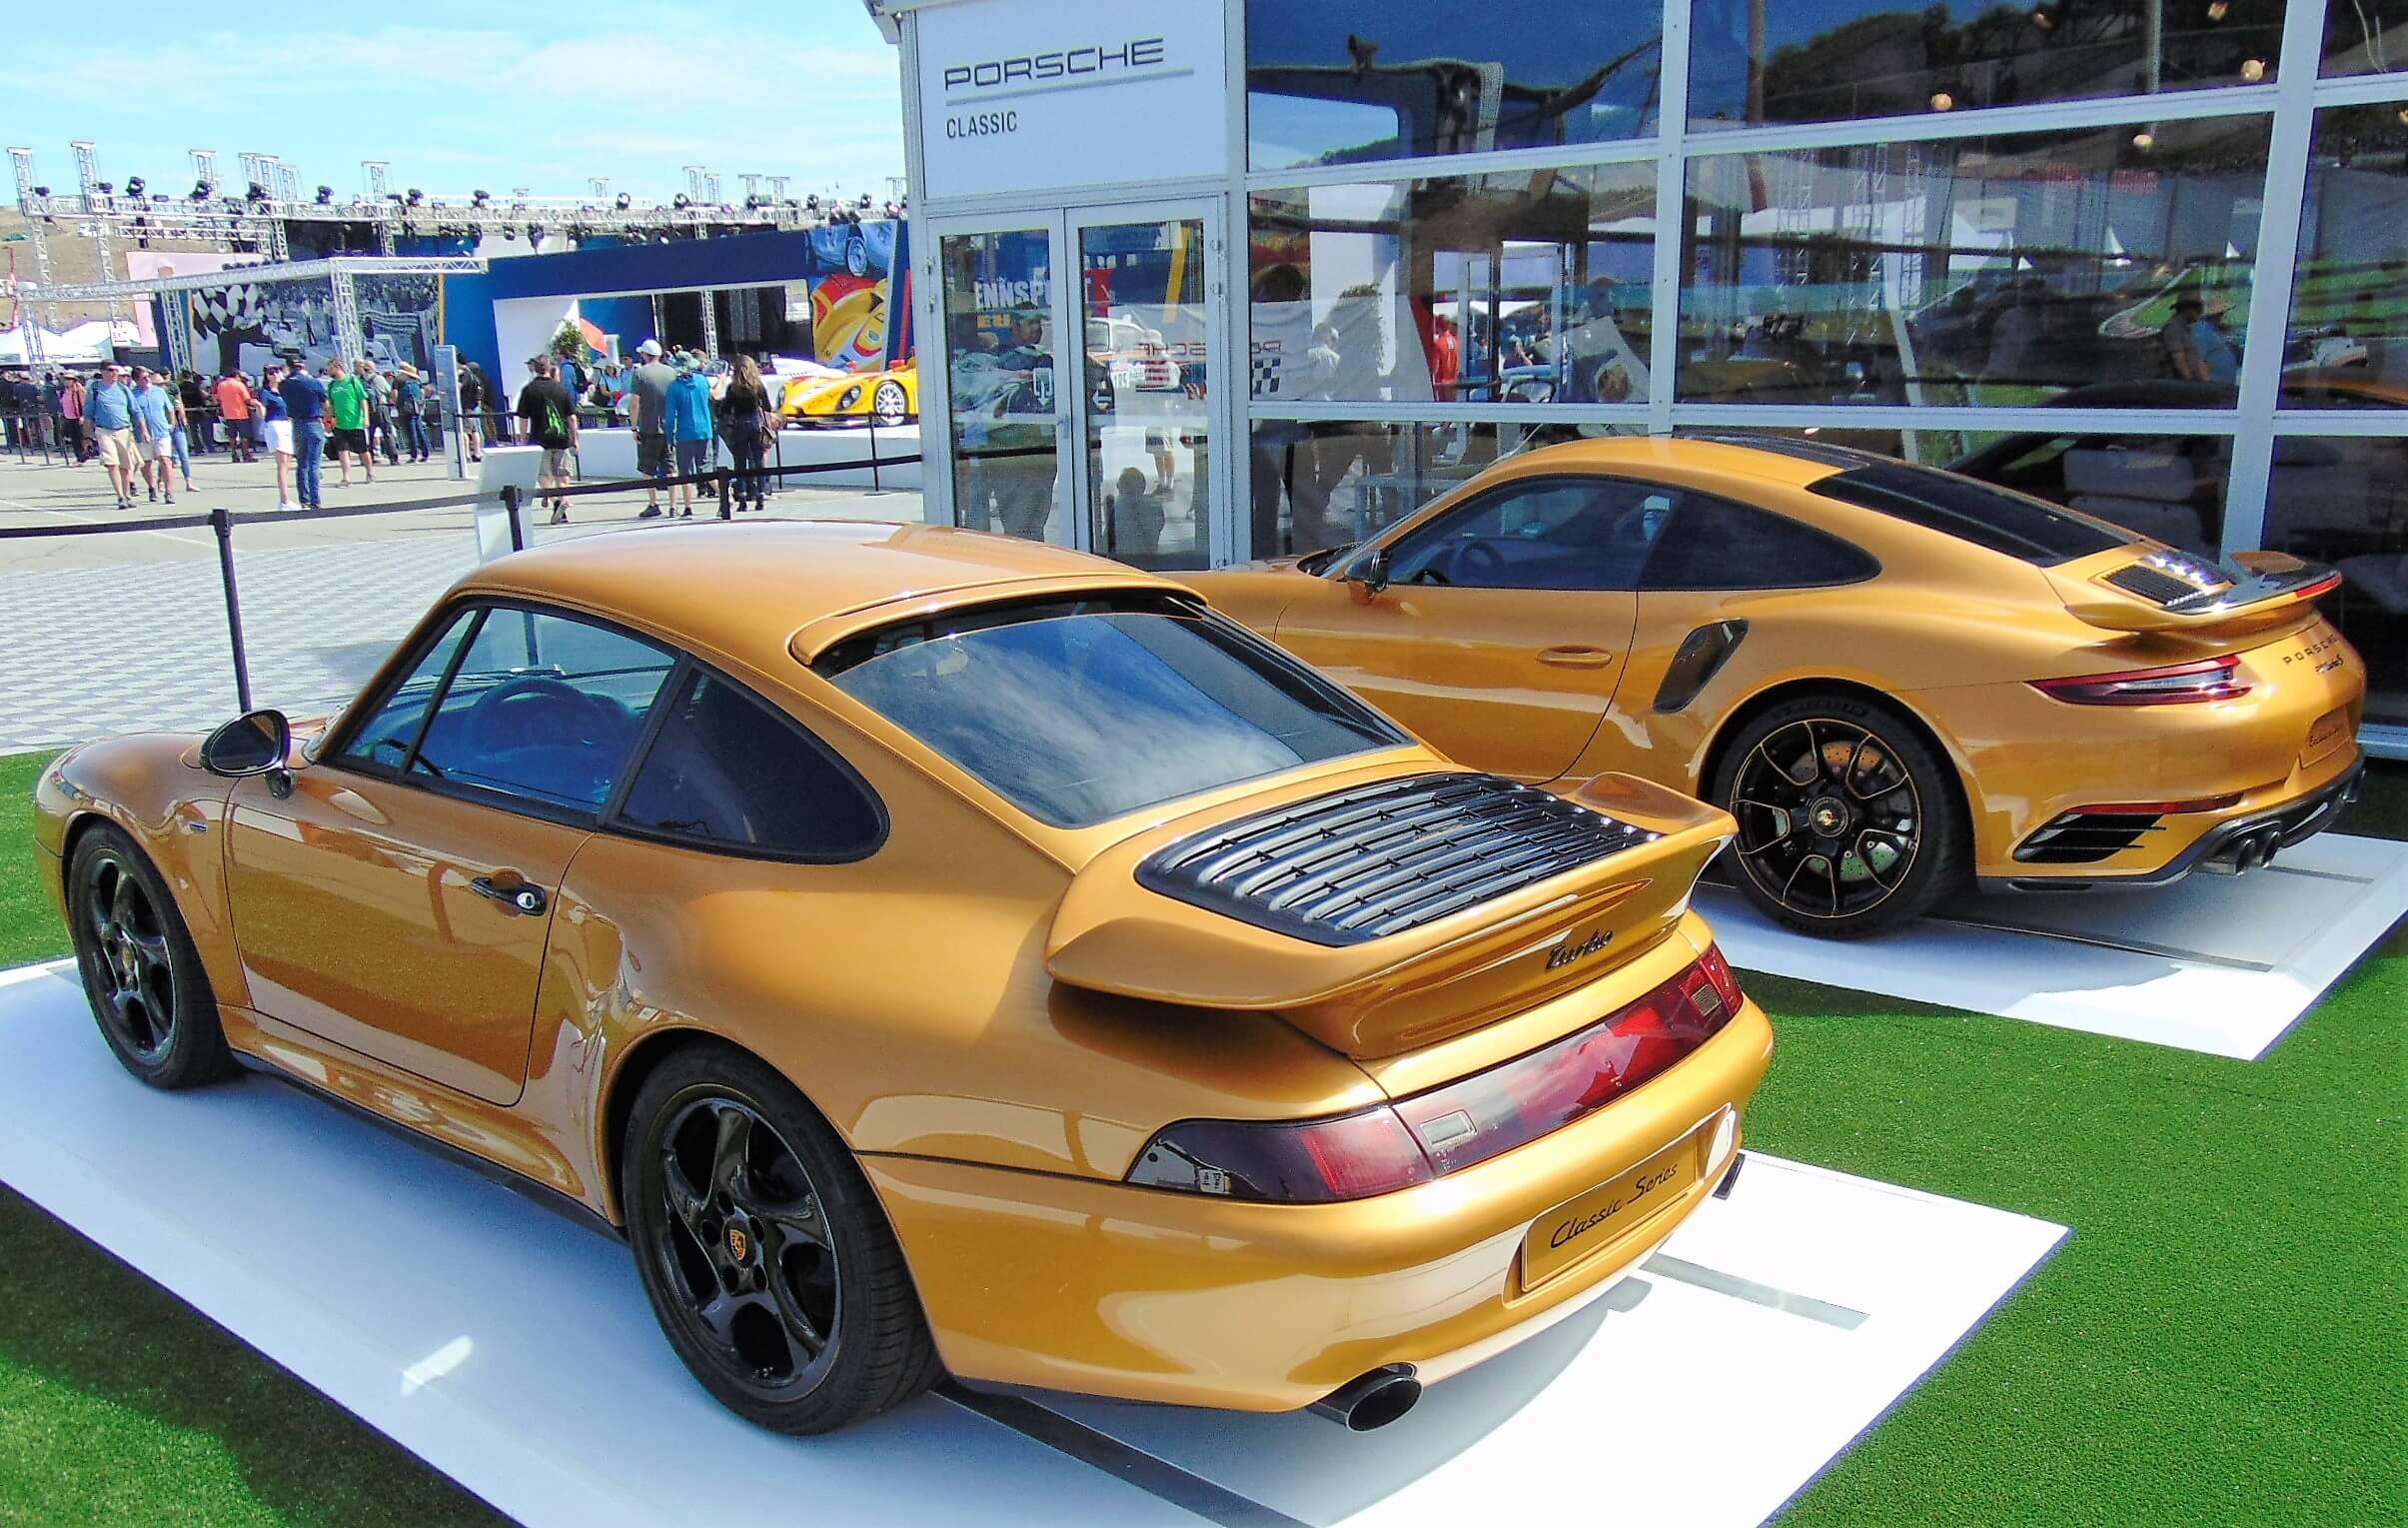 Porsche Turbo S Exclusive Series restored representations